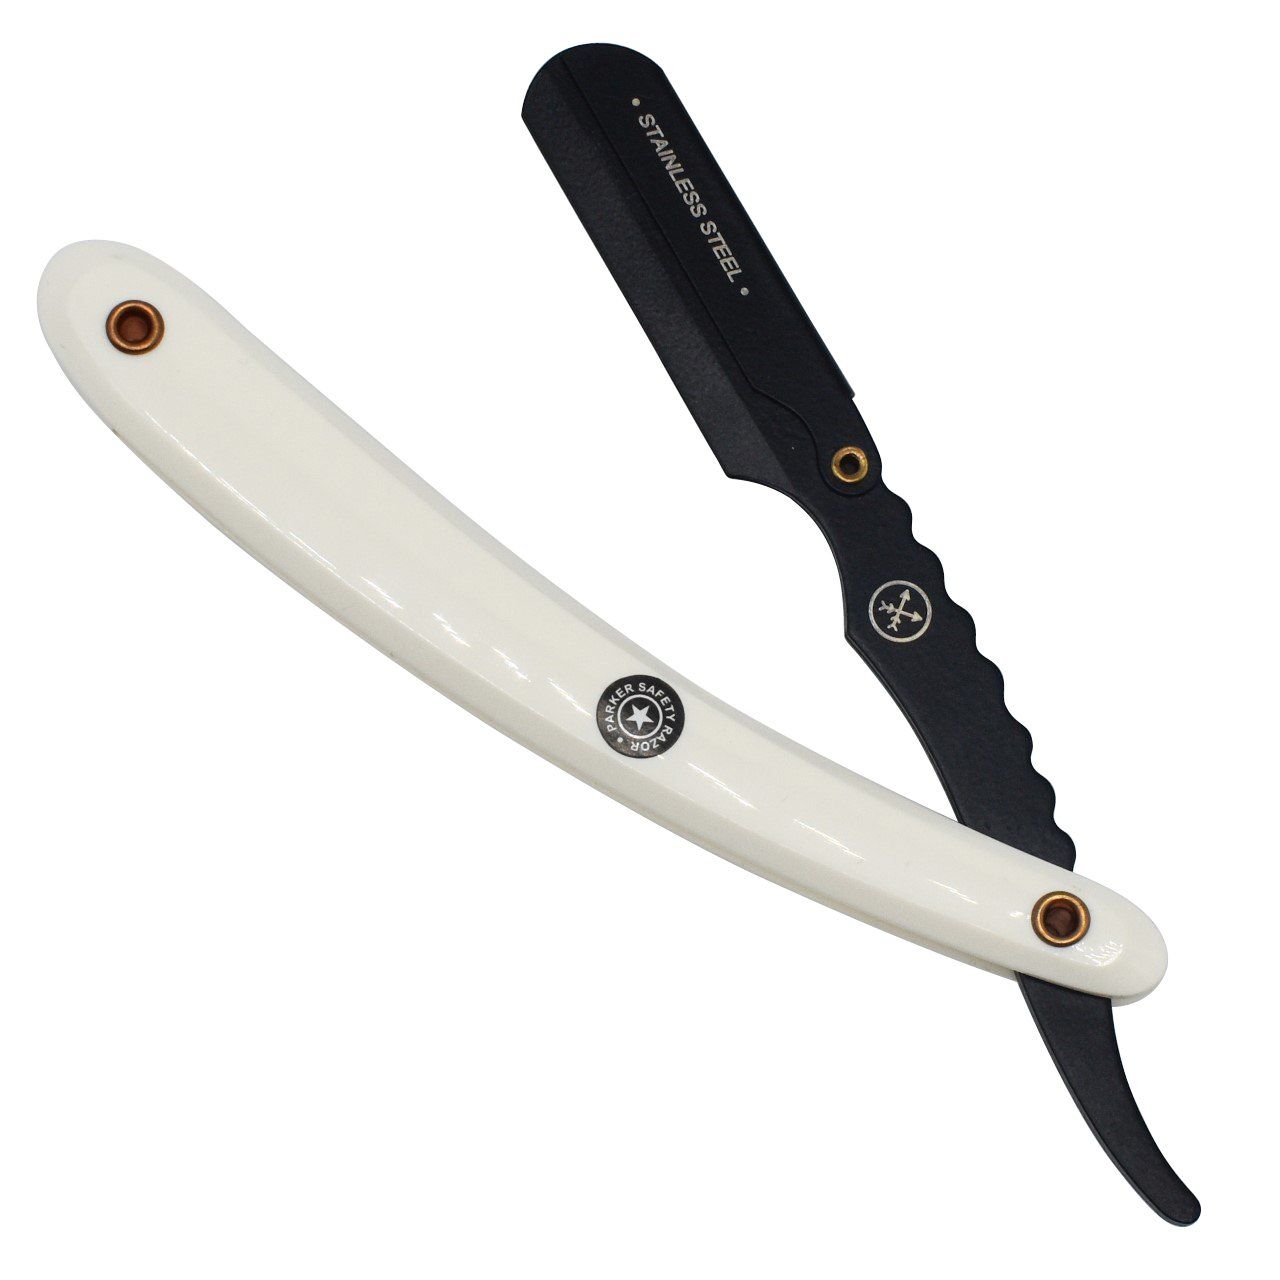 White ABS Handle Clip Type Black Blade Holder Barber/Straight Razor